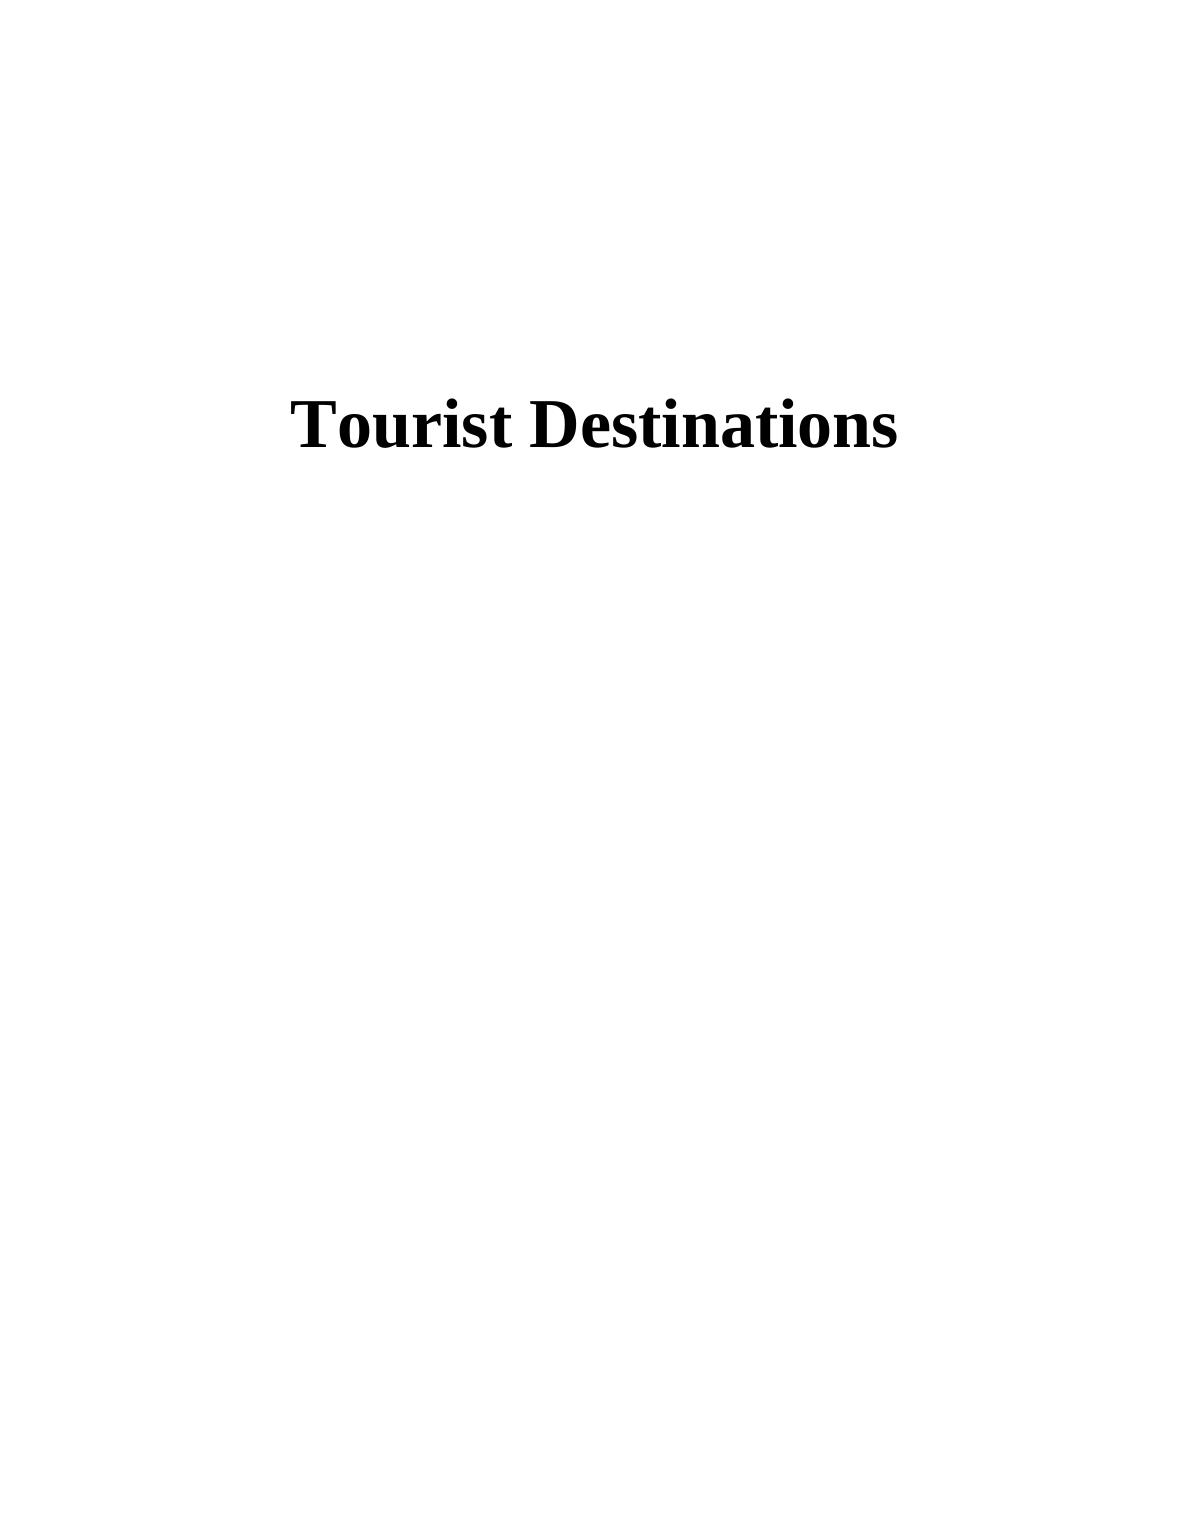 Project Report on Tourist Destinations - Trip Advisor_1